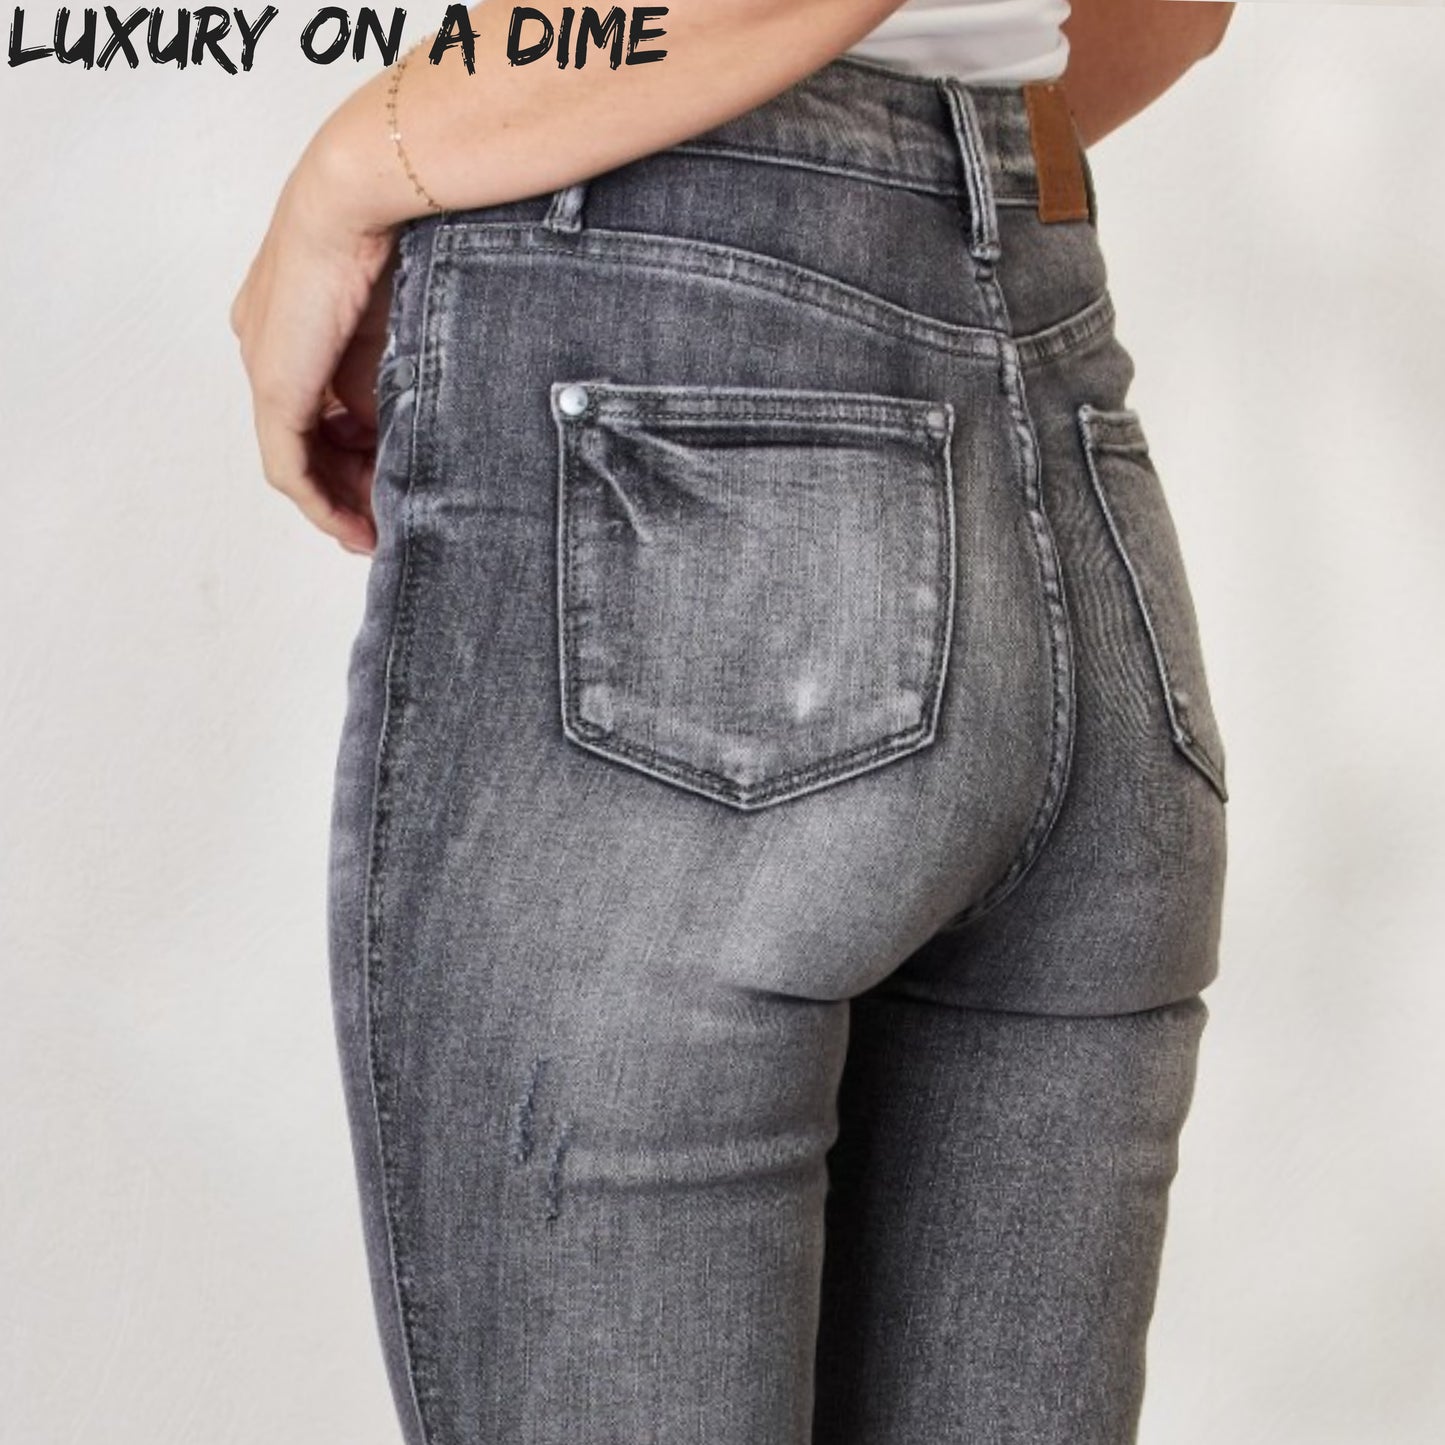 Judy Blue Full Size High Waist Tummy Control Release Hem Skinny Jeans